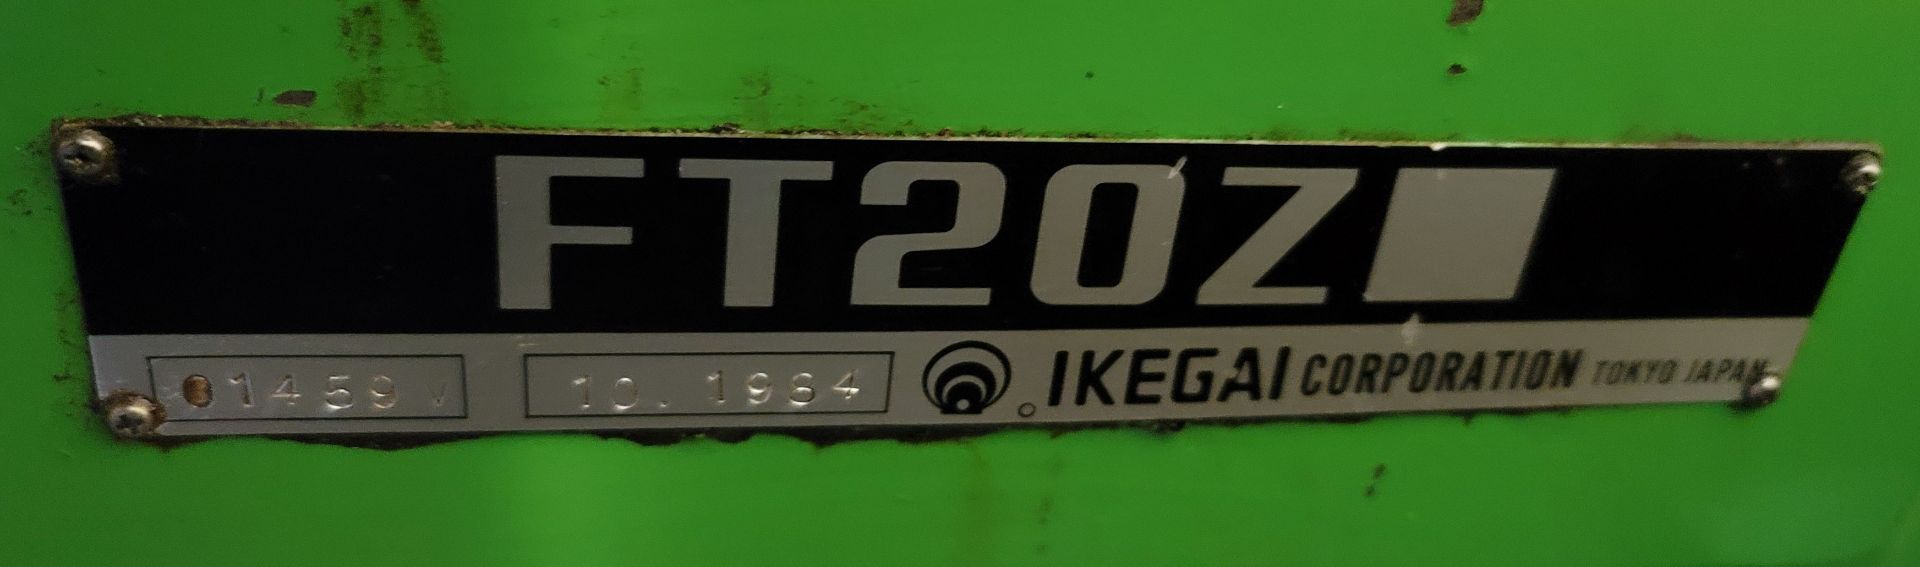 1984 IKEGAI CNC LATHE, MODEL FX-20Z, 8" CHUCK, FANUC 6T CONTROL, 8-STATION TURRET, S/N 1459V - Image 6 of 6